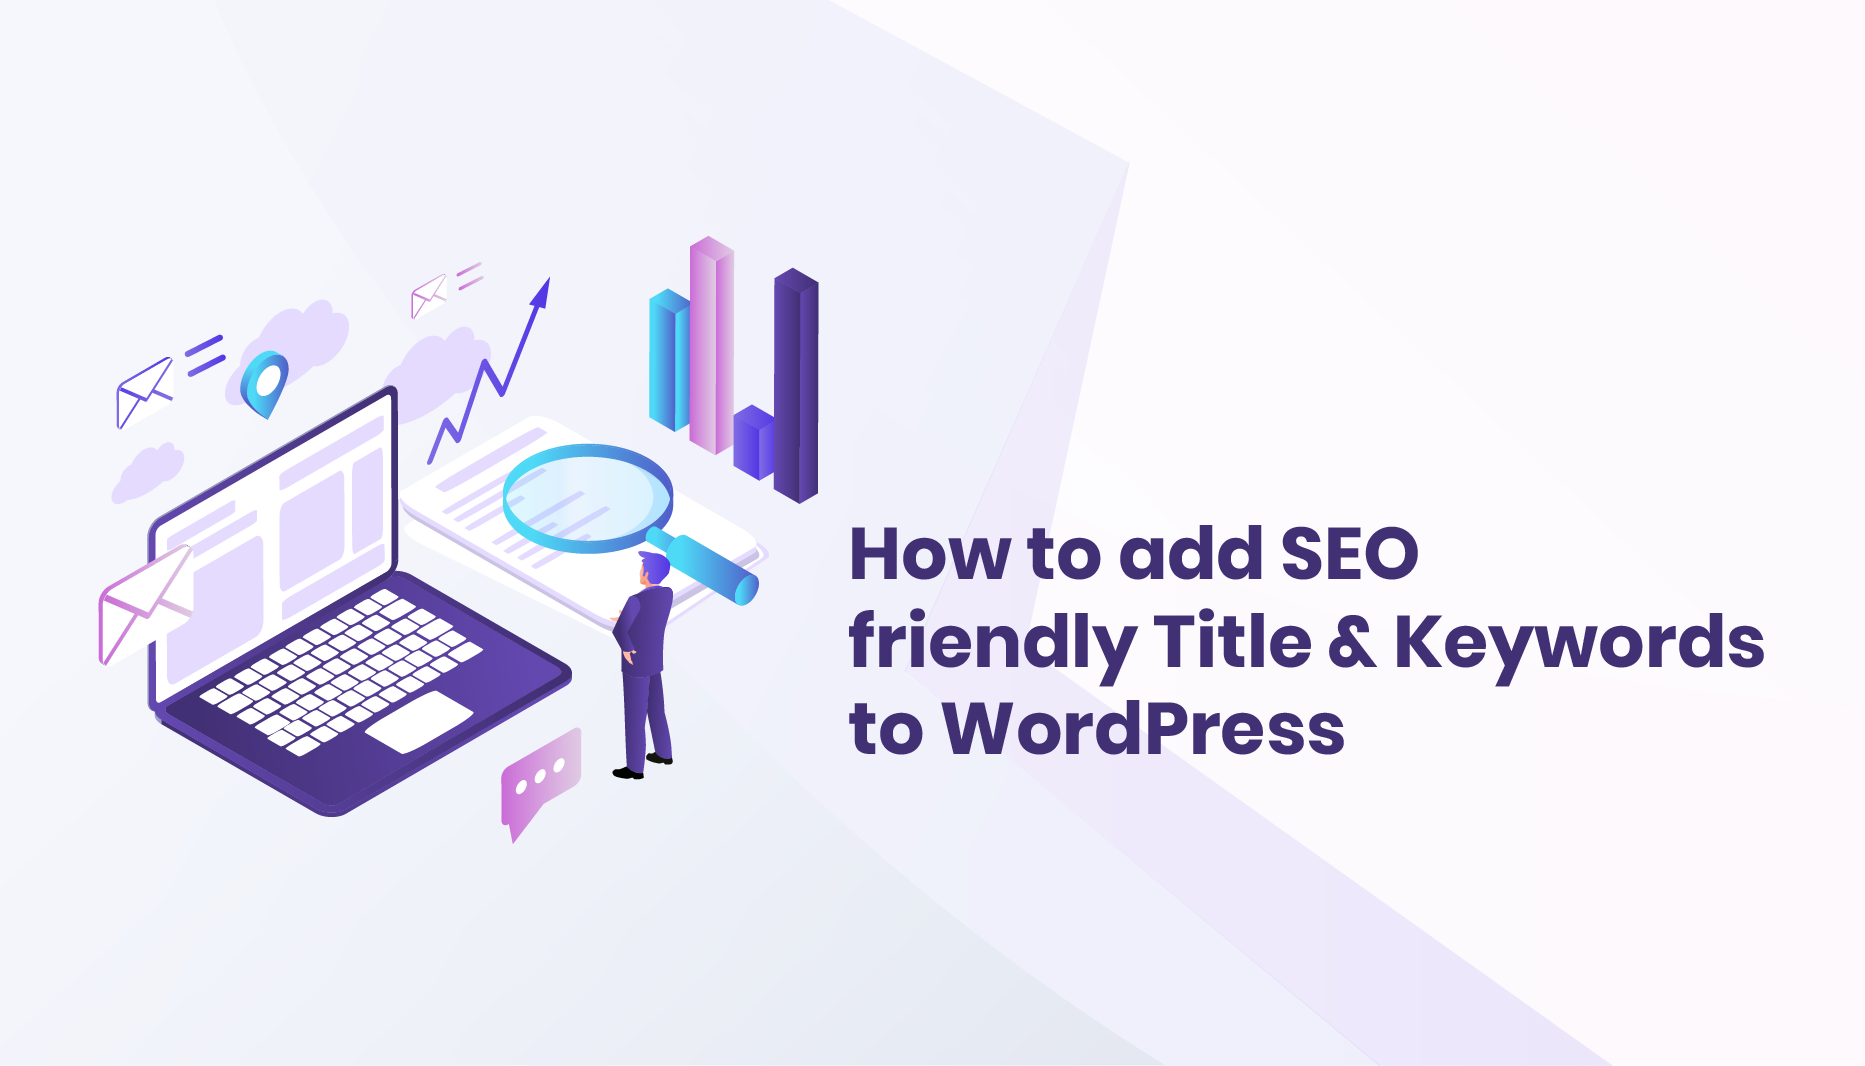 How to add SEO friendly Title & Keywords to WordPress